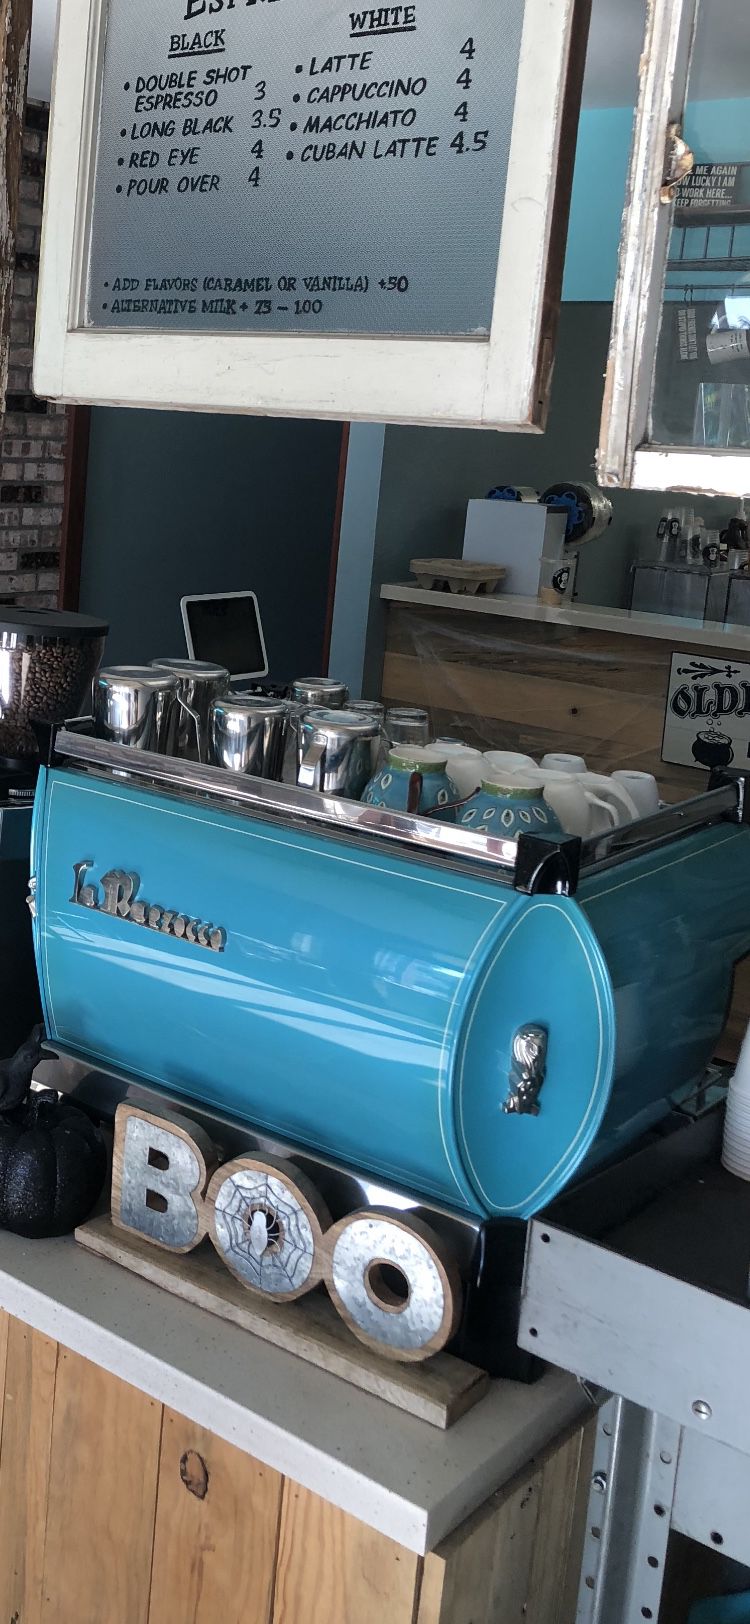 Bodum Coffee Grinder for Sale in Los Angeles, CA - OfferUp